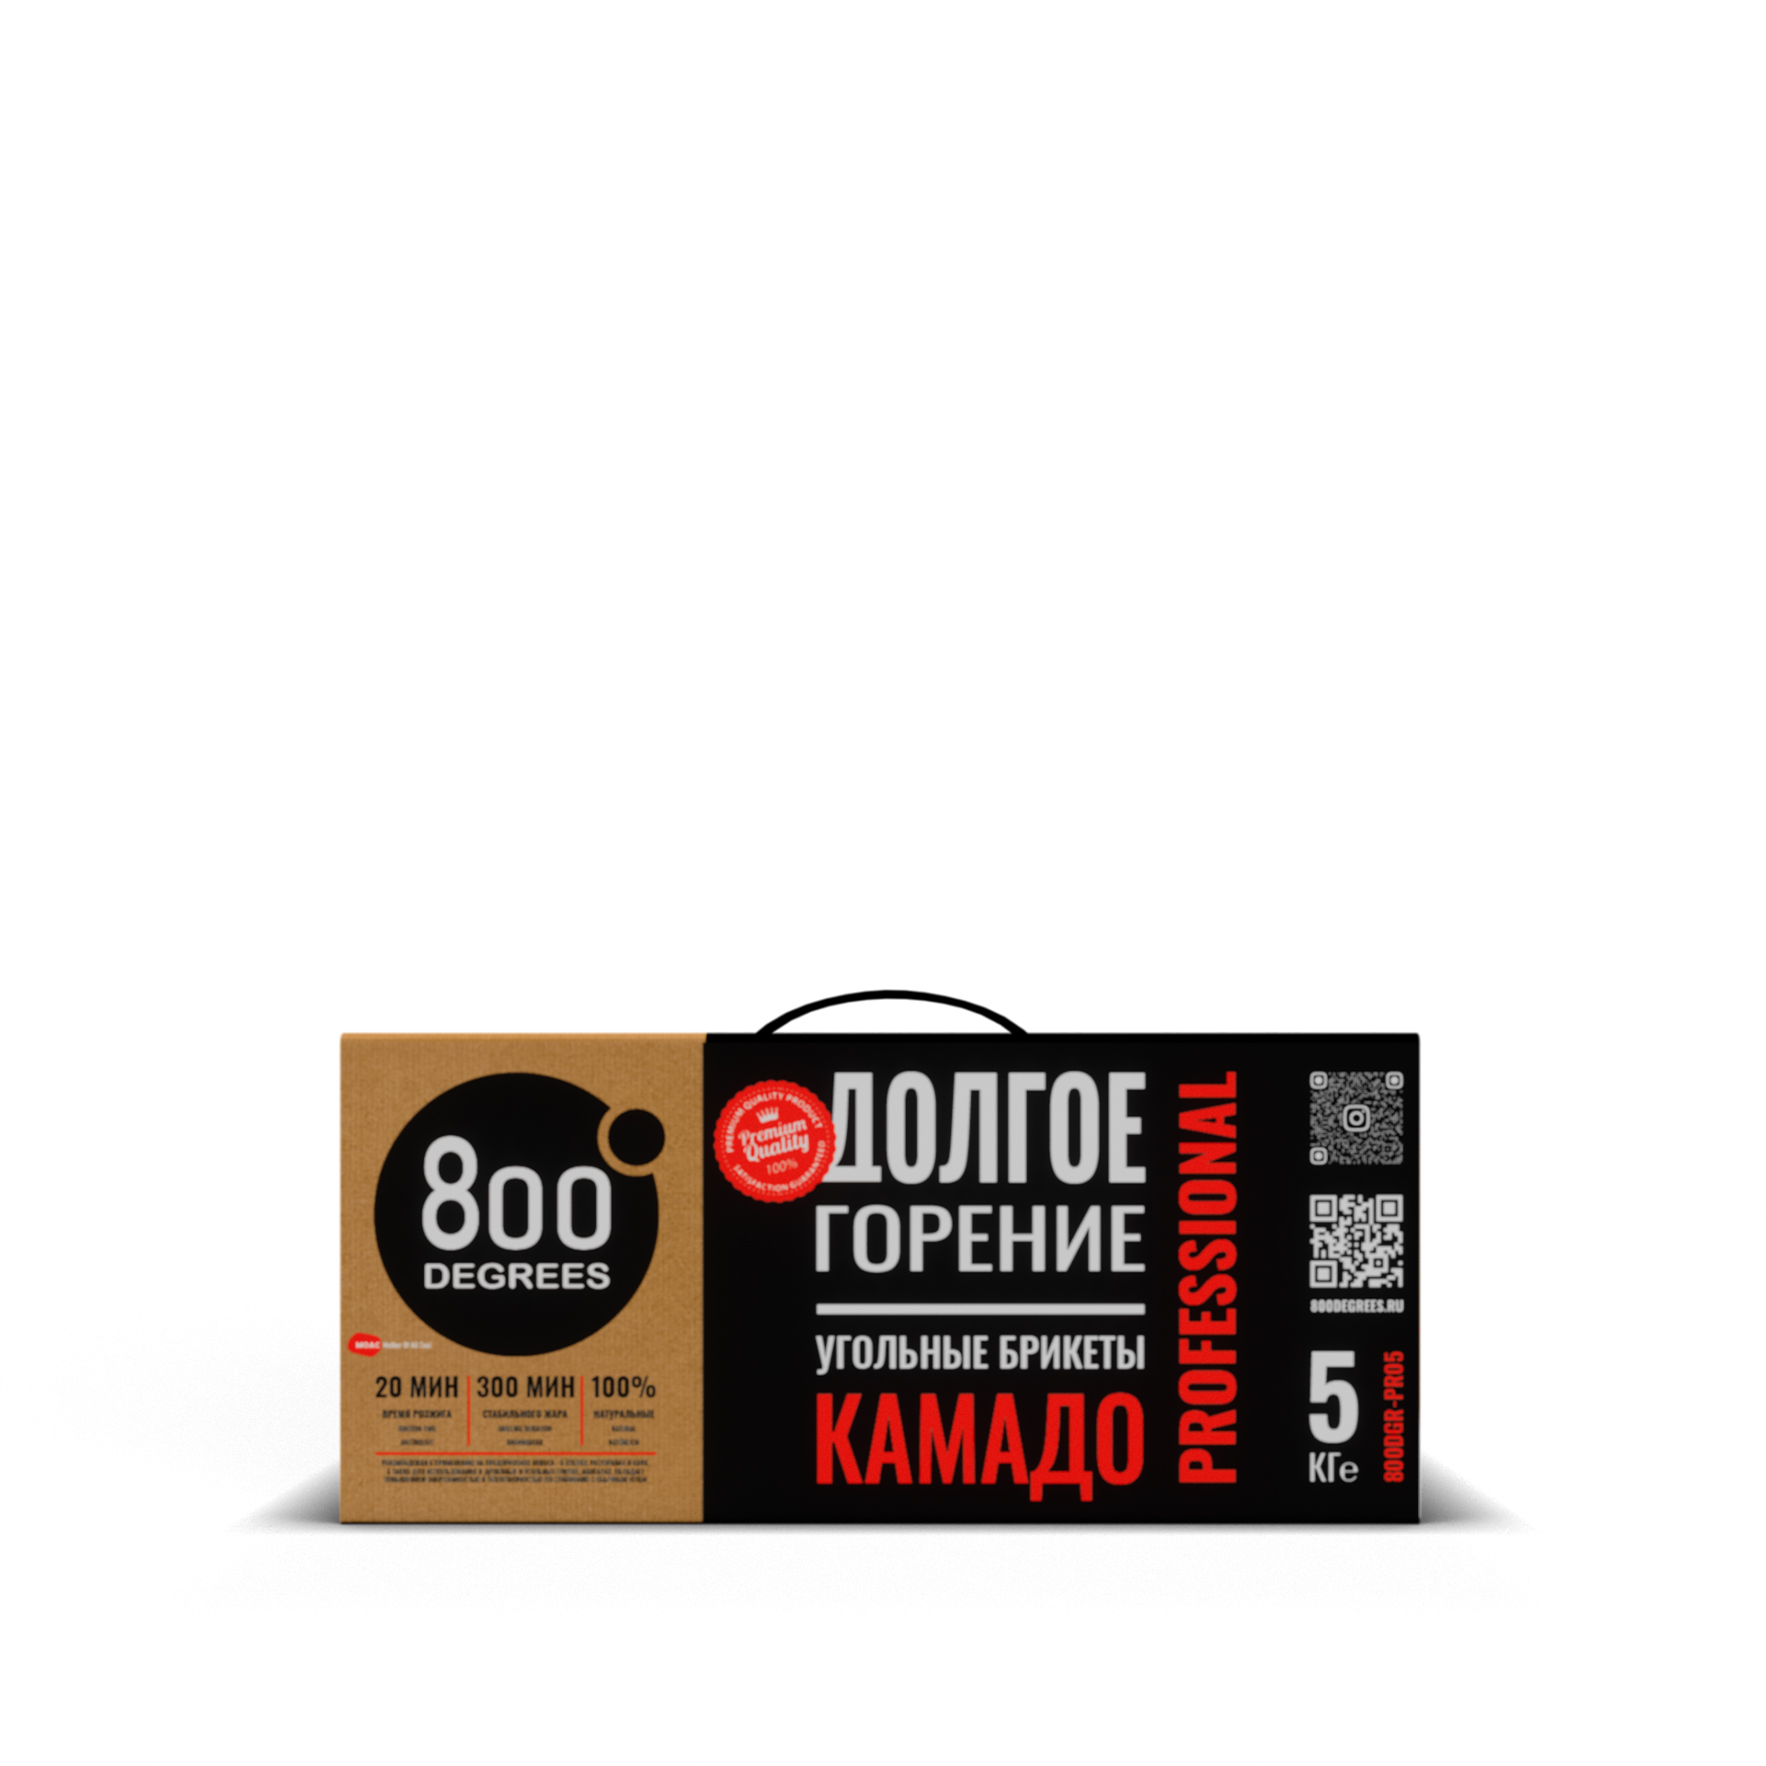 Угольные брикеты Камадо 800 Degrees Kamado Pini-Kay, коробка 5 кг